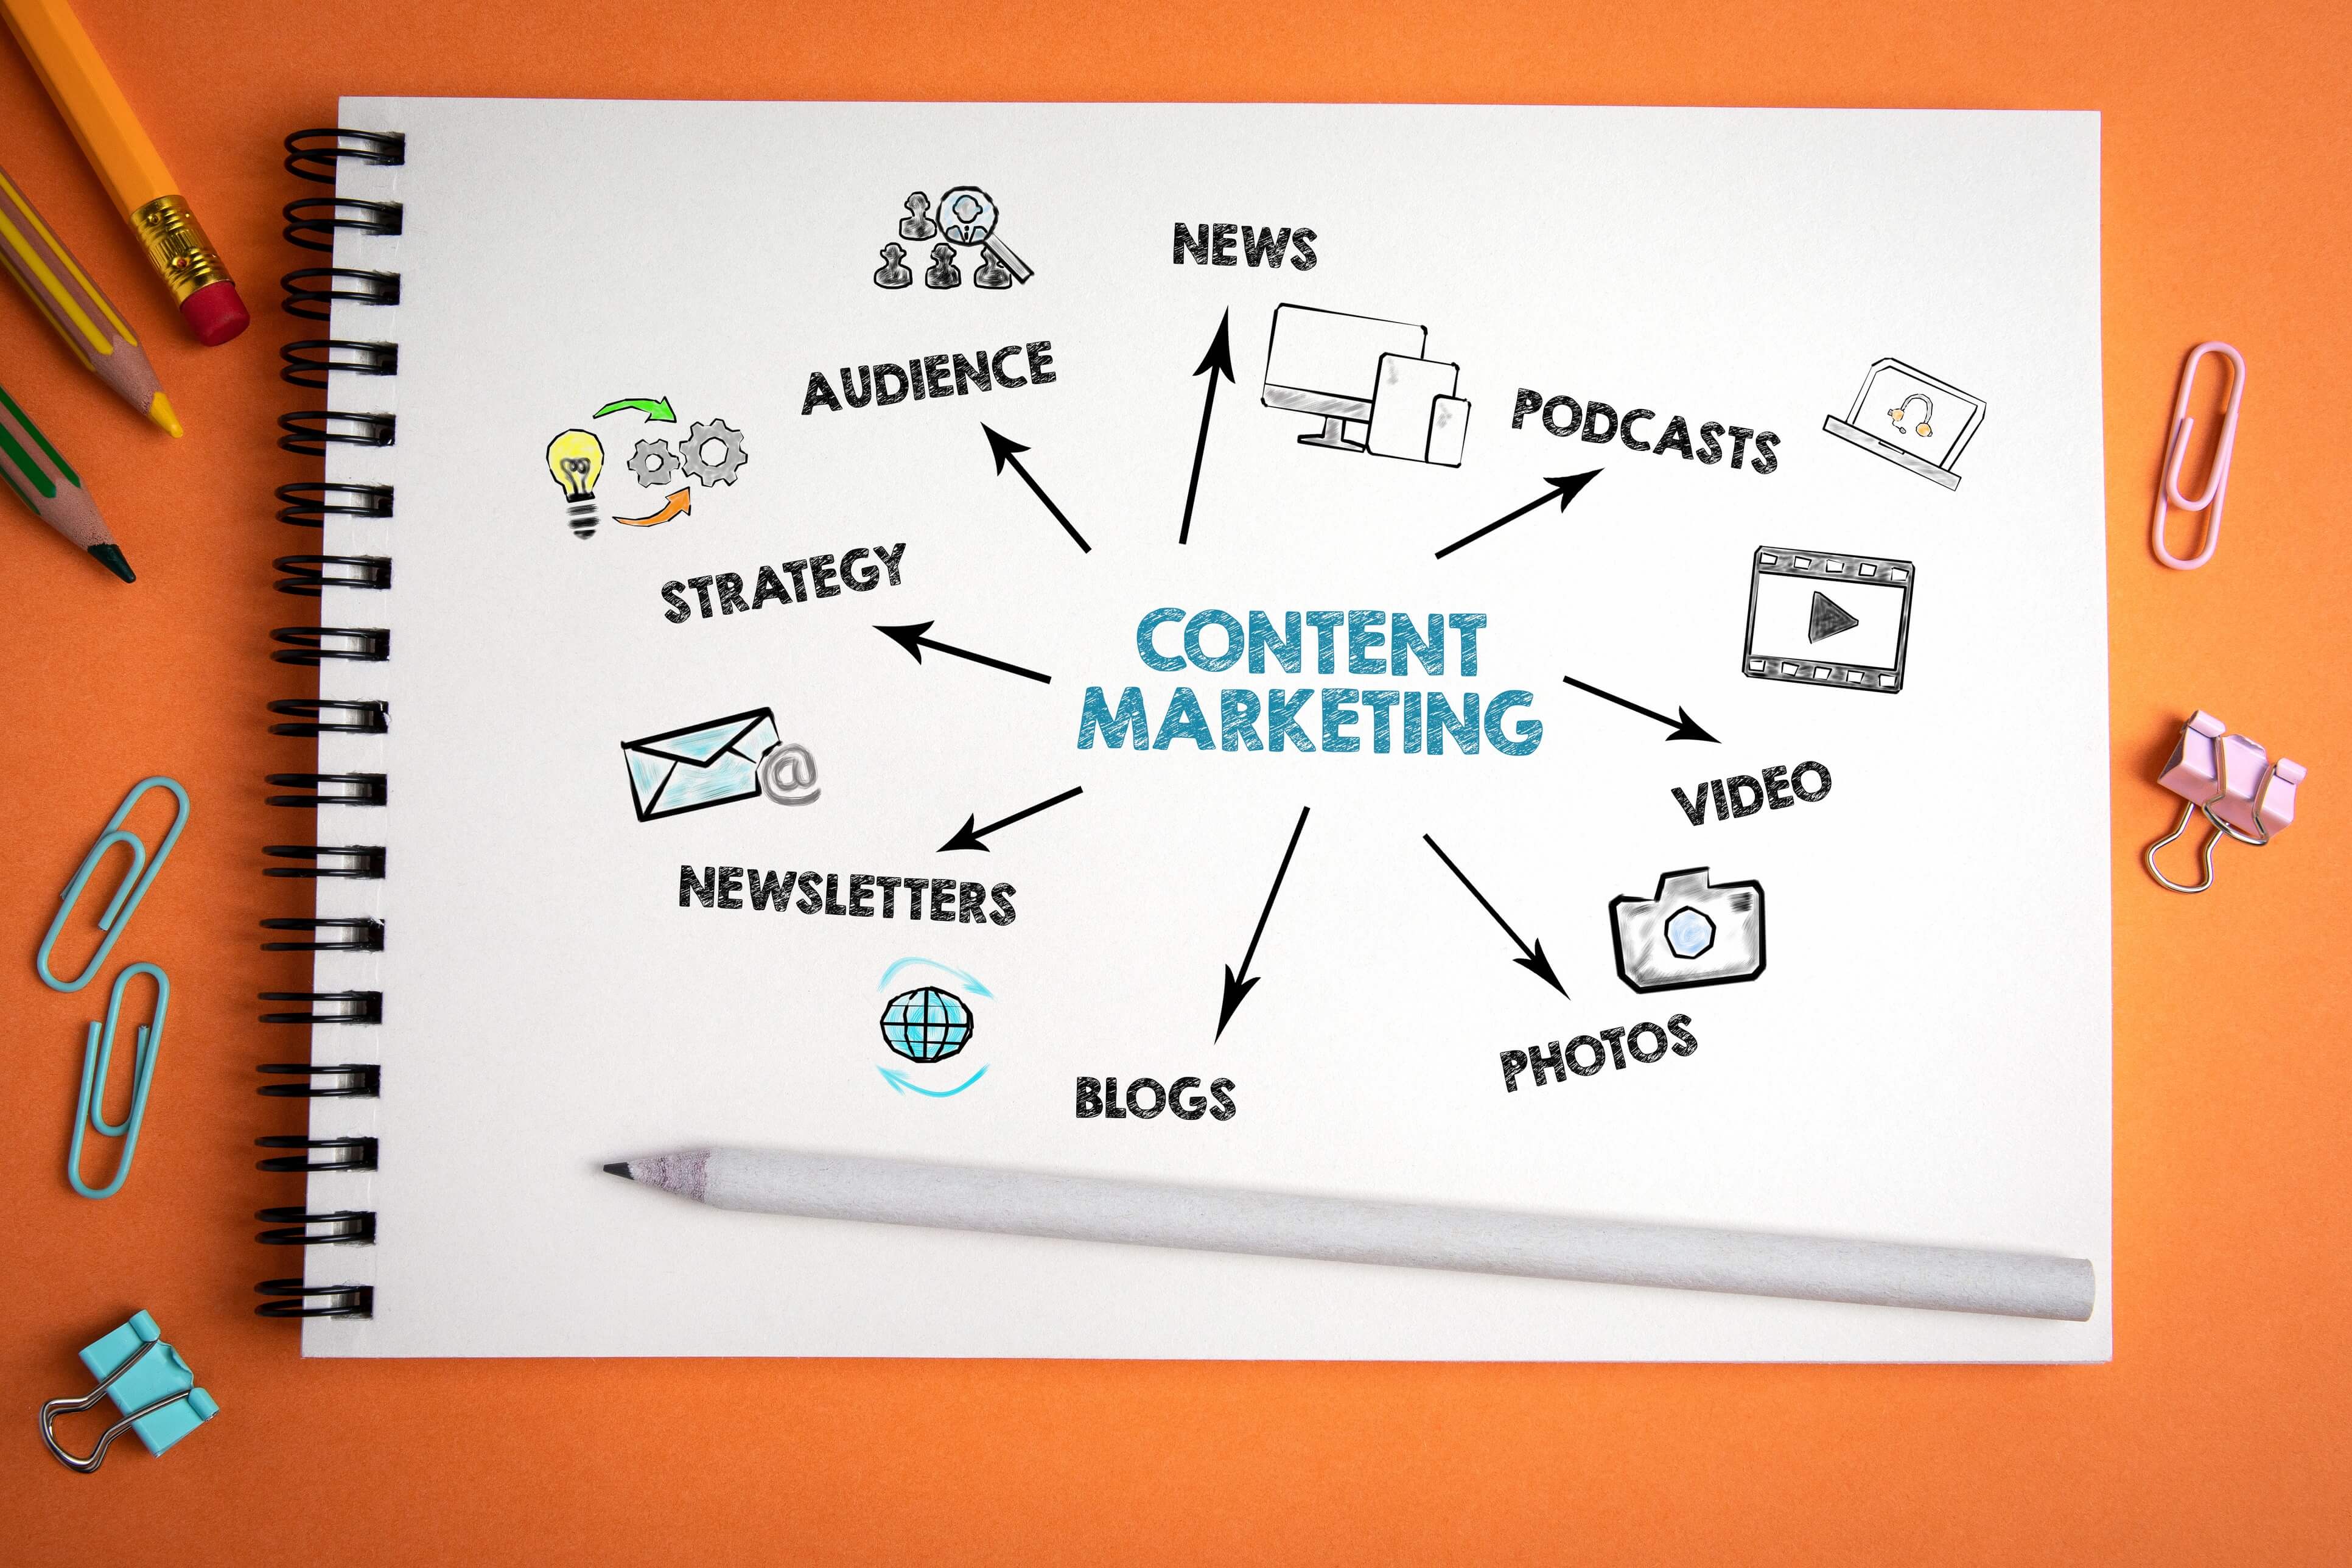 content marketing concept